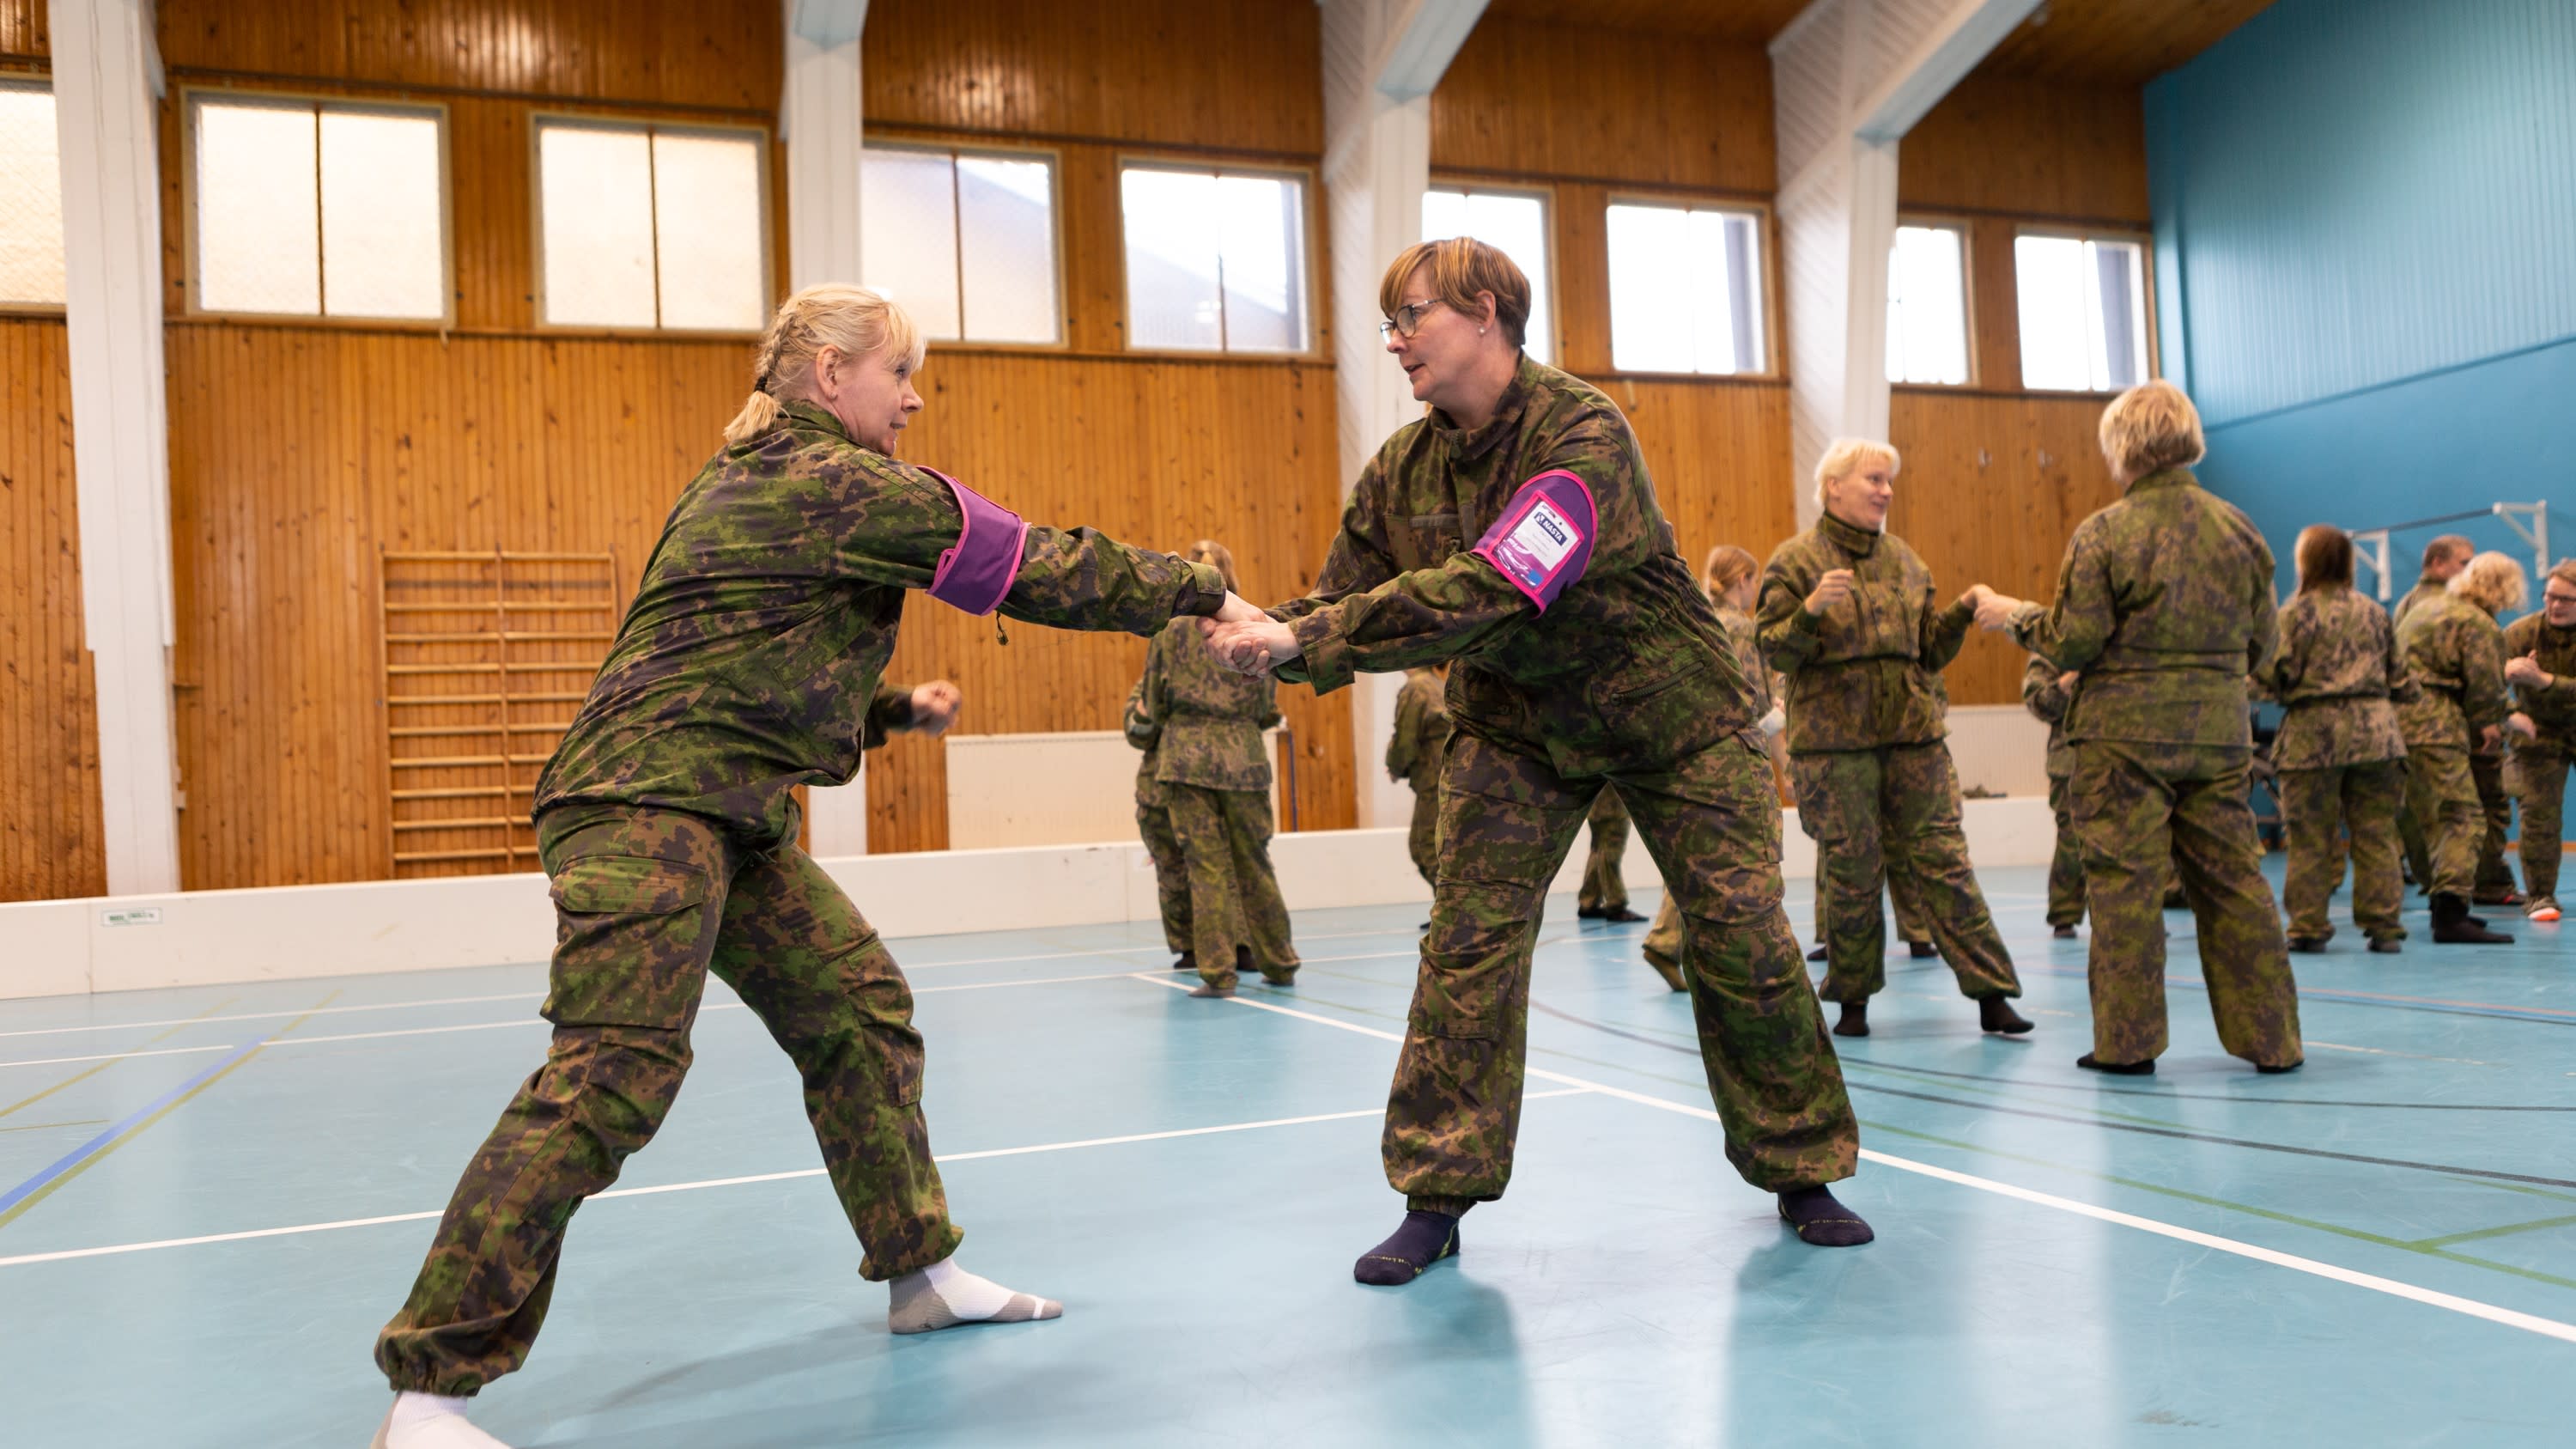 Hundreds register for defense training courses in Finland